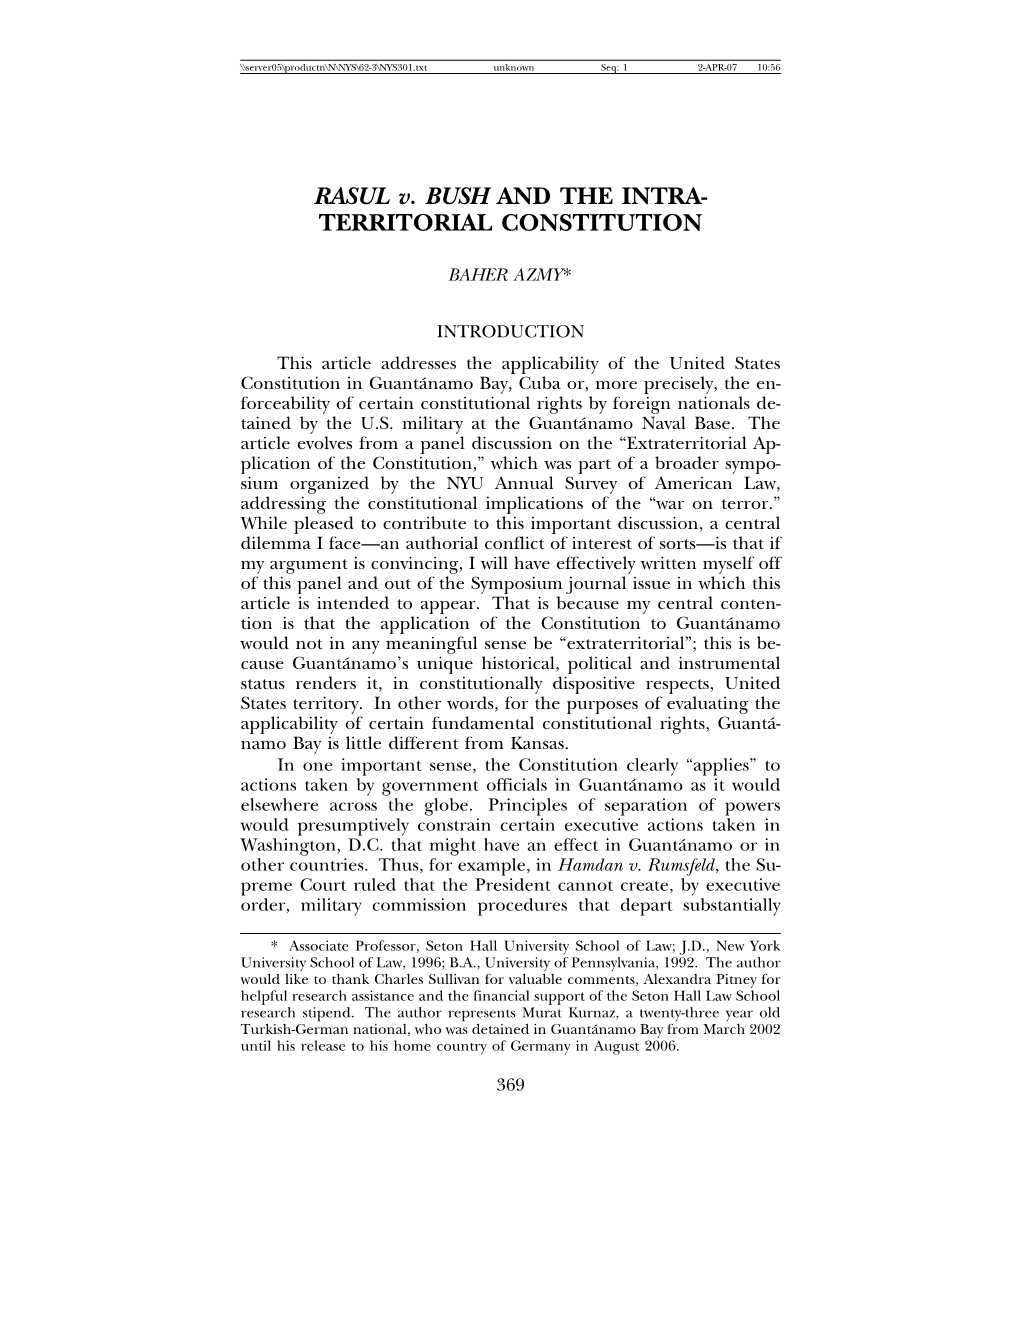 RASUL V. BUSH and the INTRA- TERRITORIAL CONSTITUTION